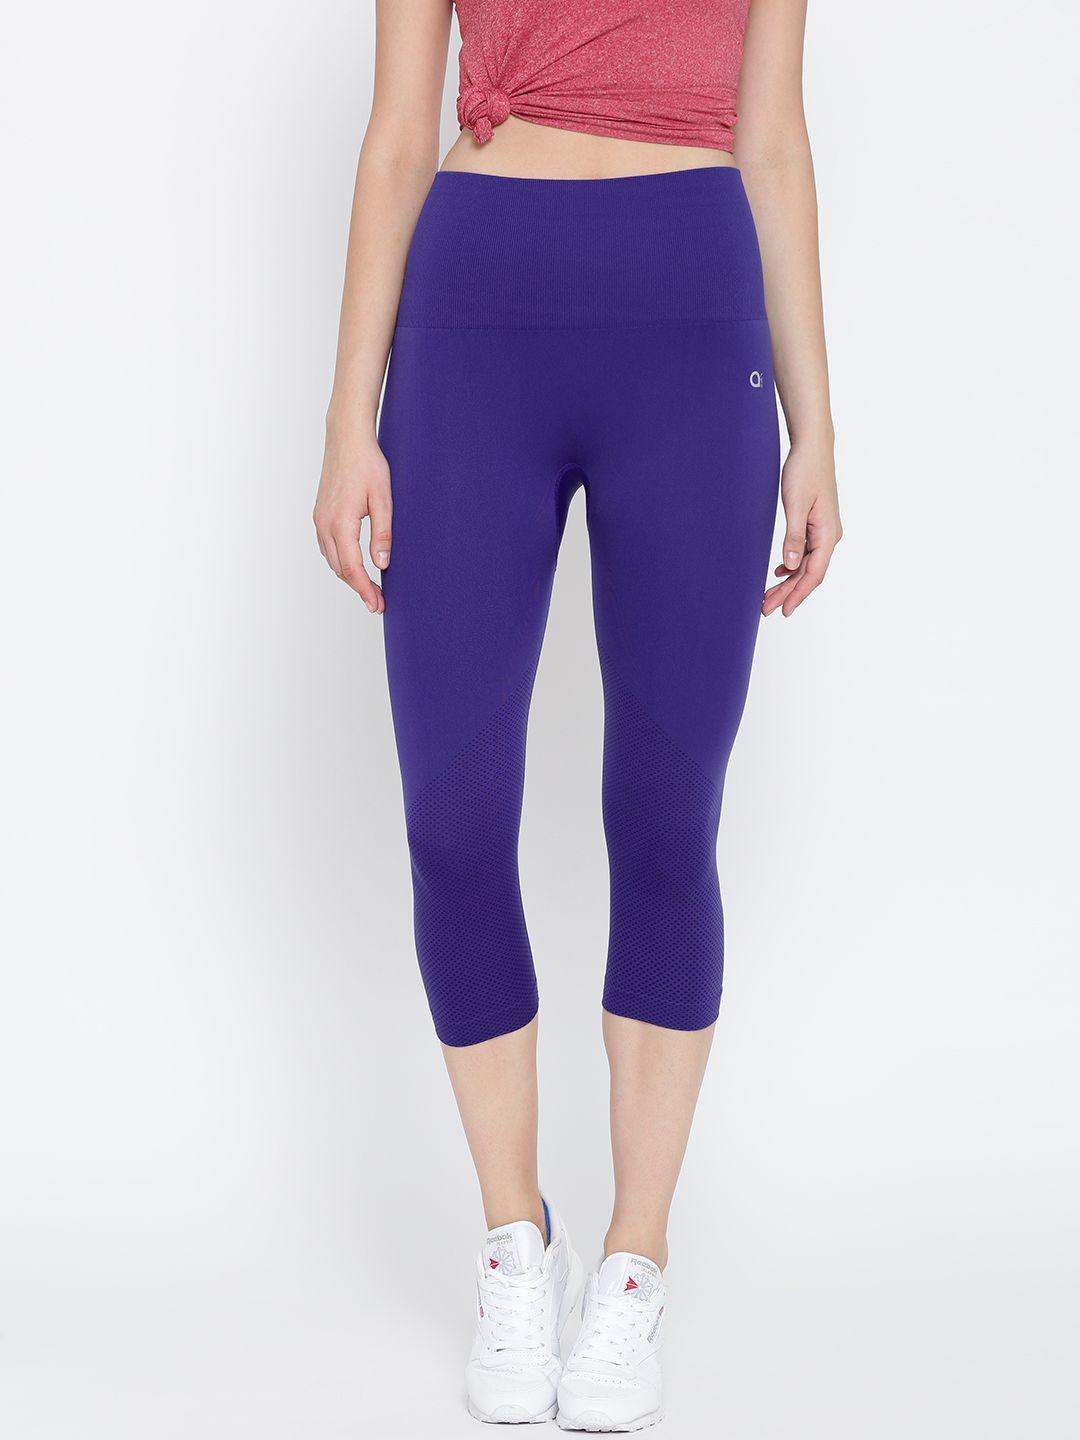 amante purple activewear capris